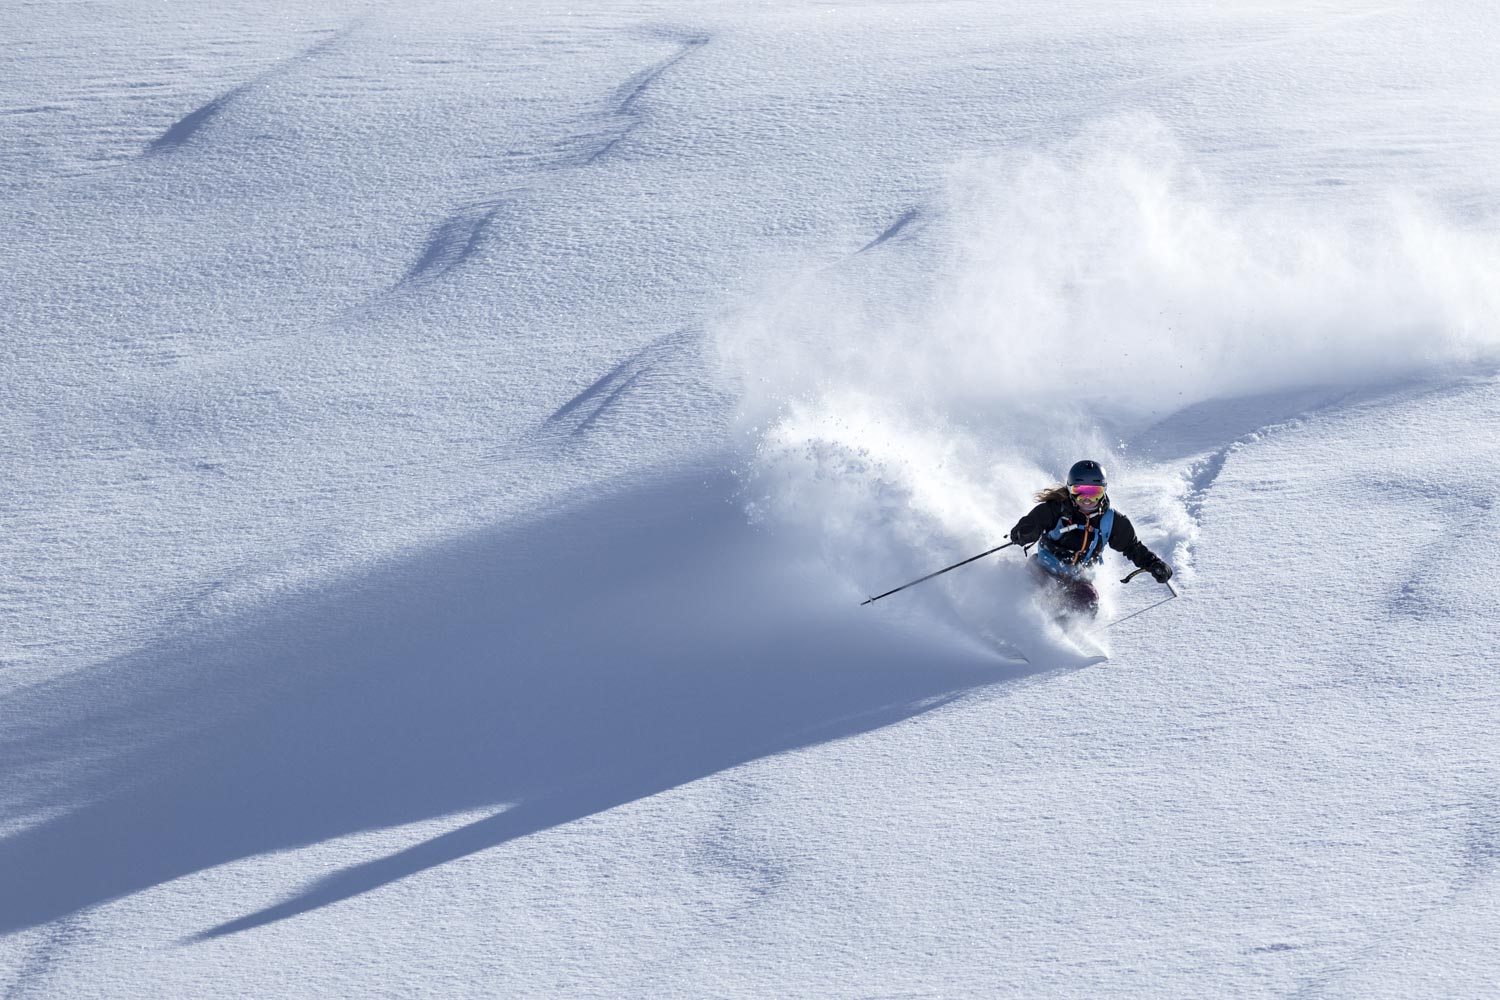 Sungod - Masque de Ski - Virage en Poudreuse - Ski - Hors Piste - Val d'Isère - Frankie Pioli